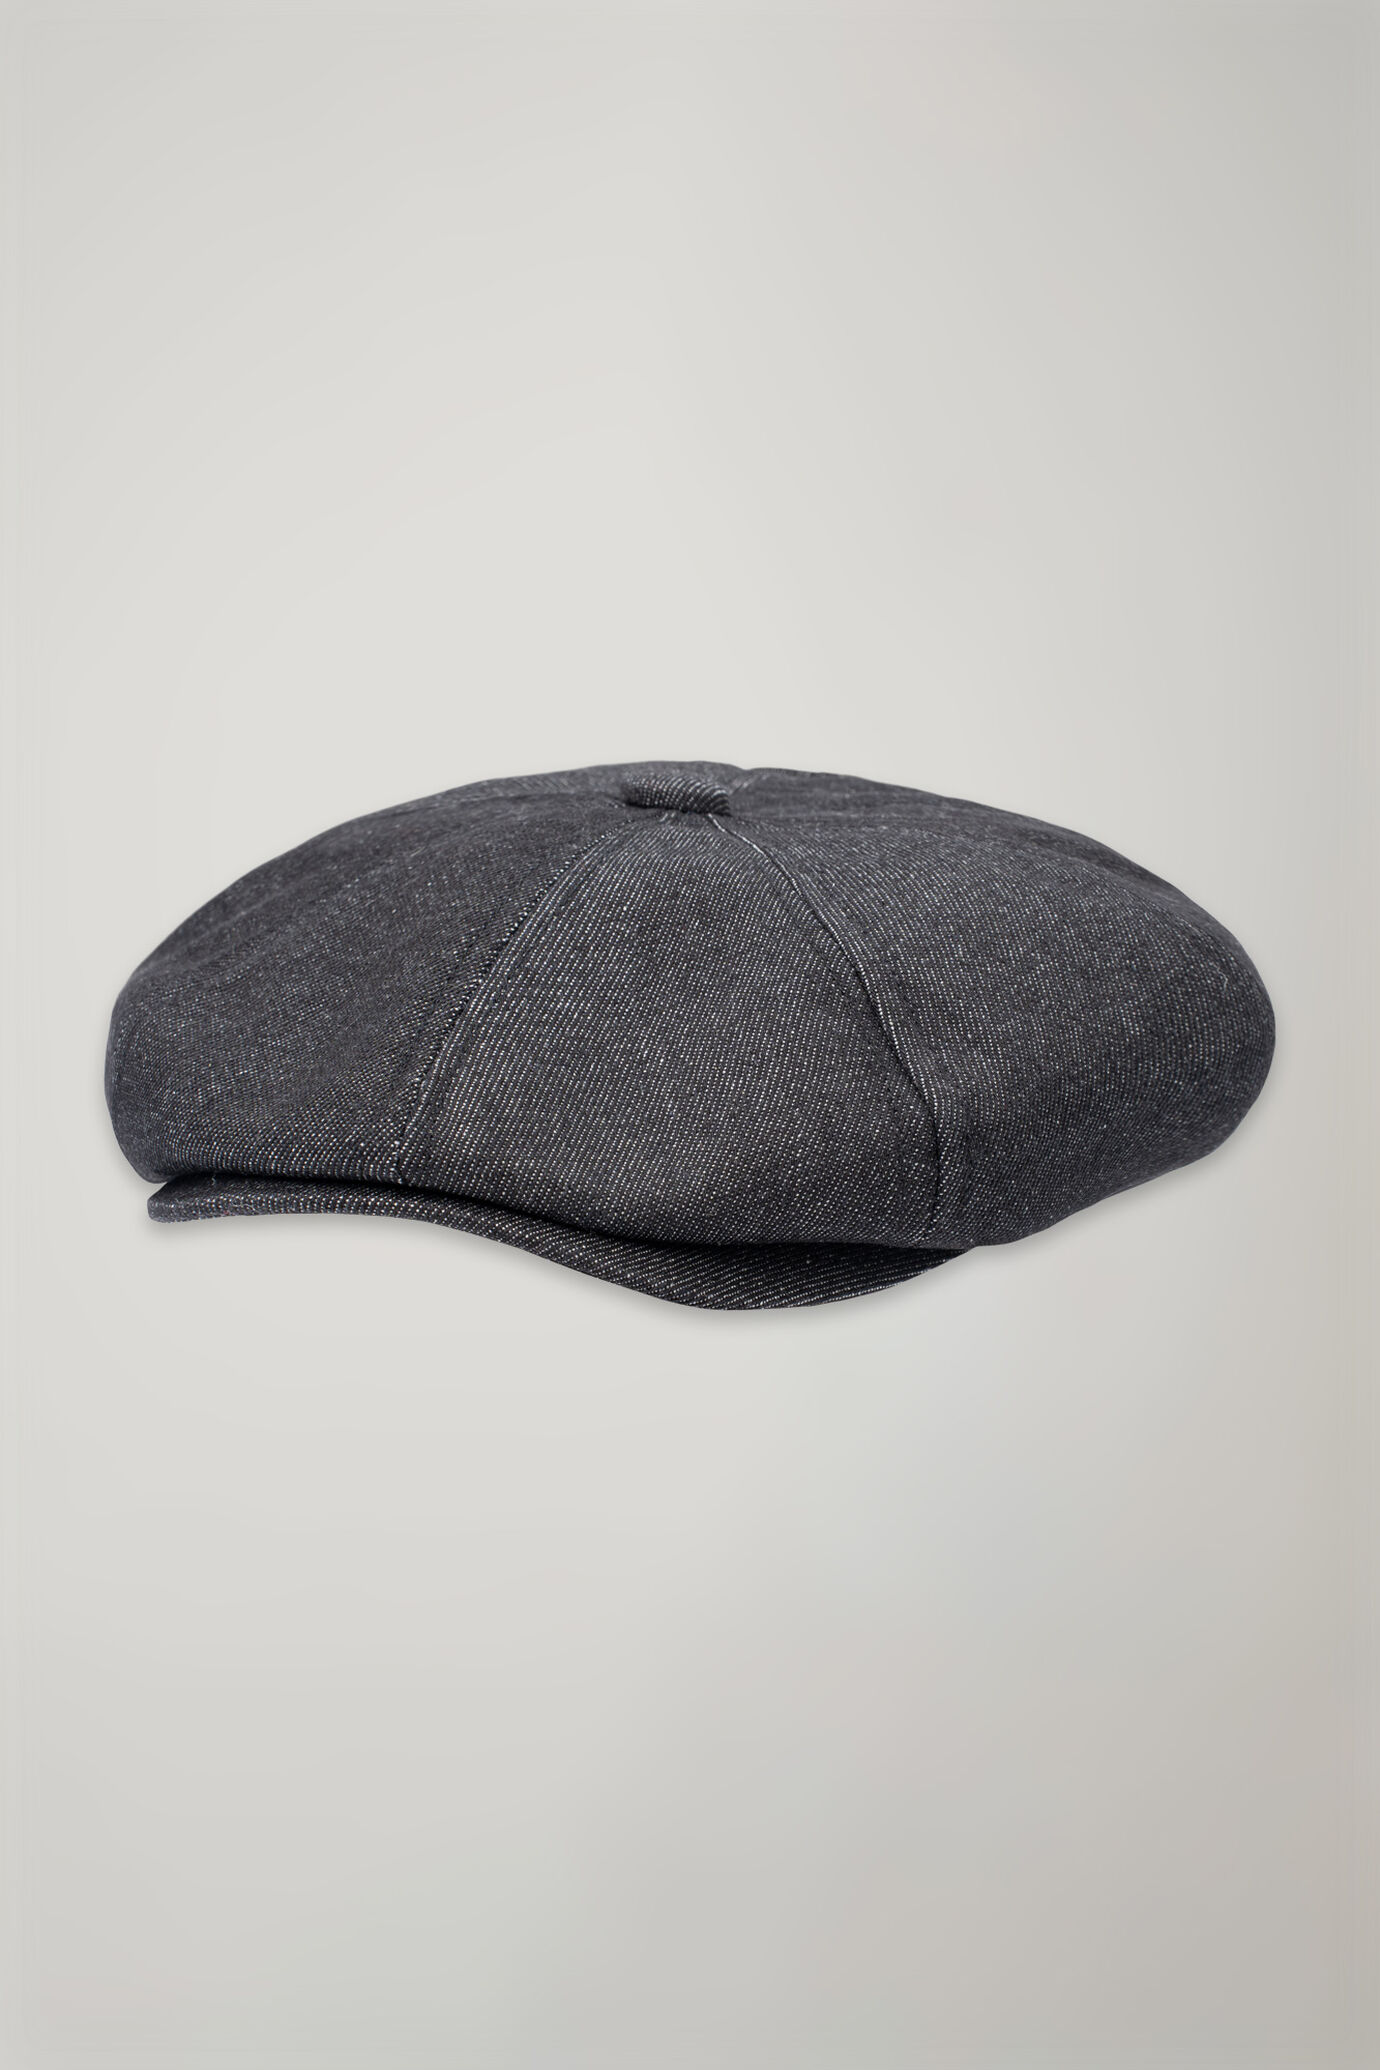 Men's black denim newsboy hat